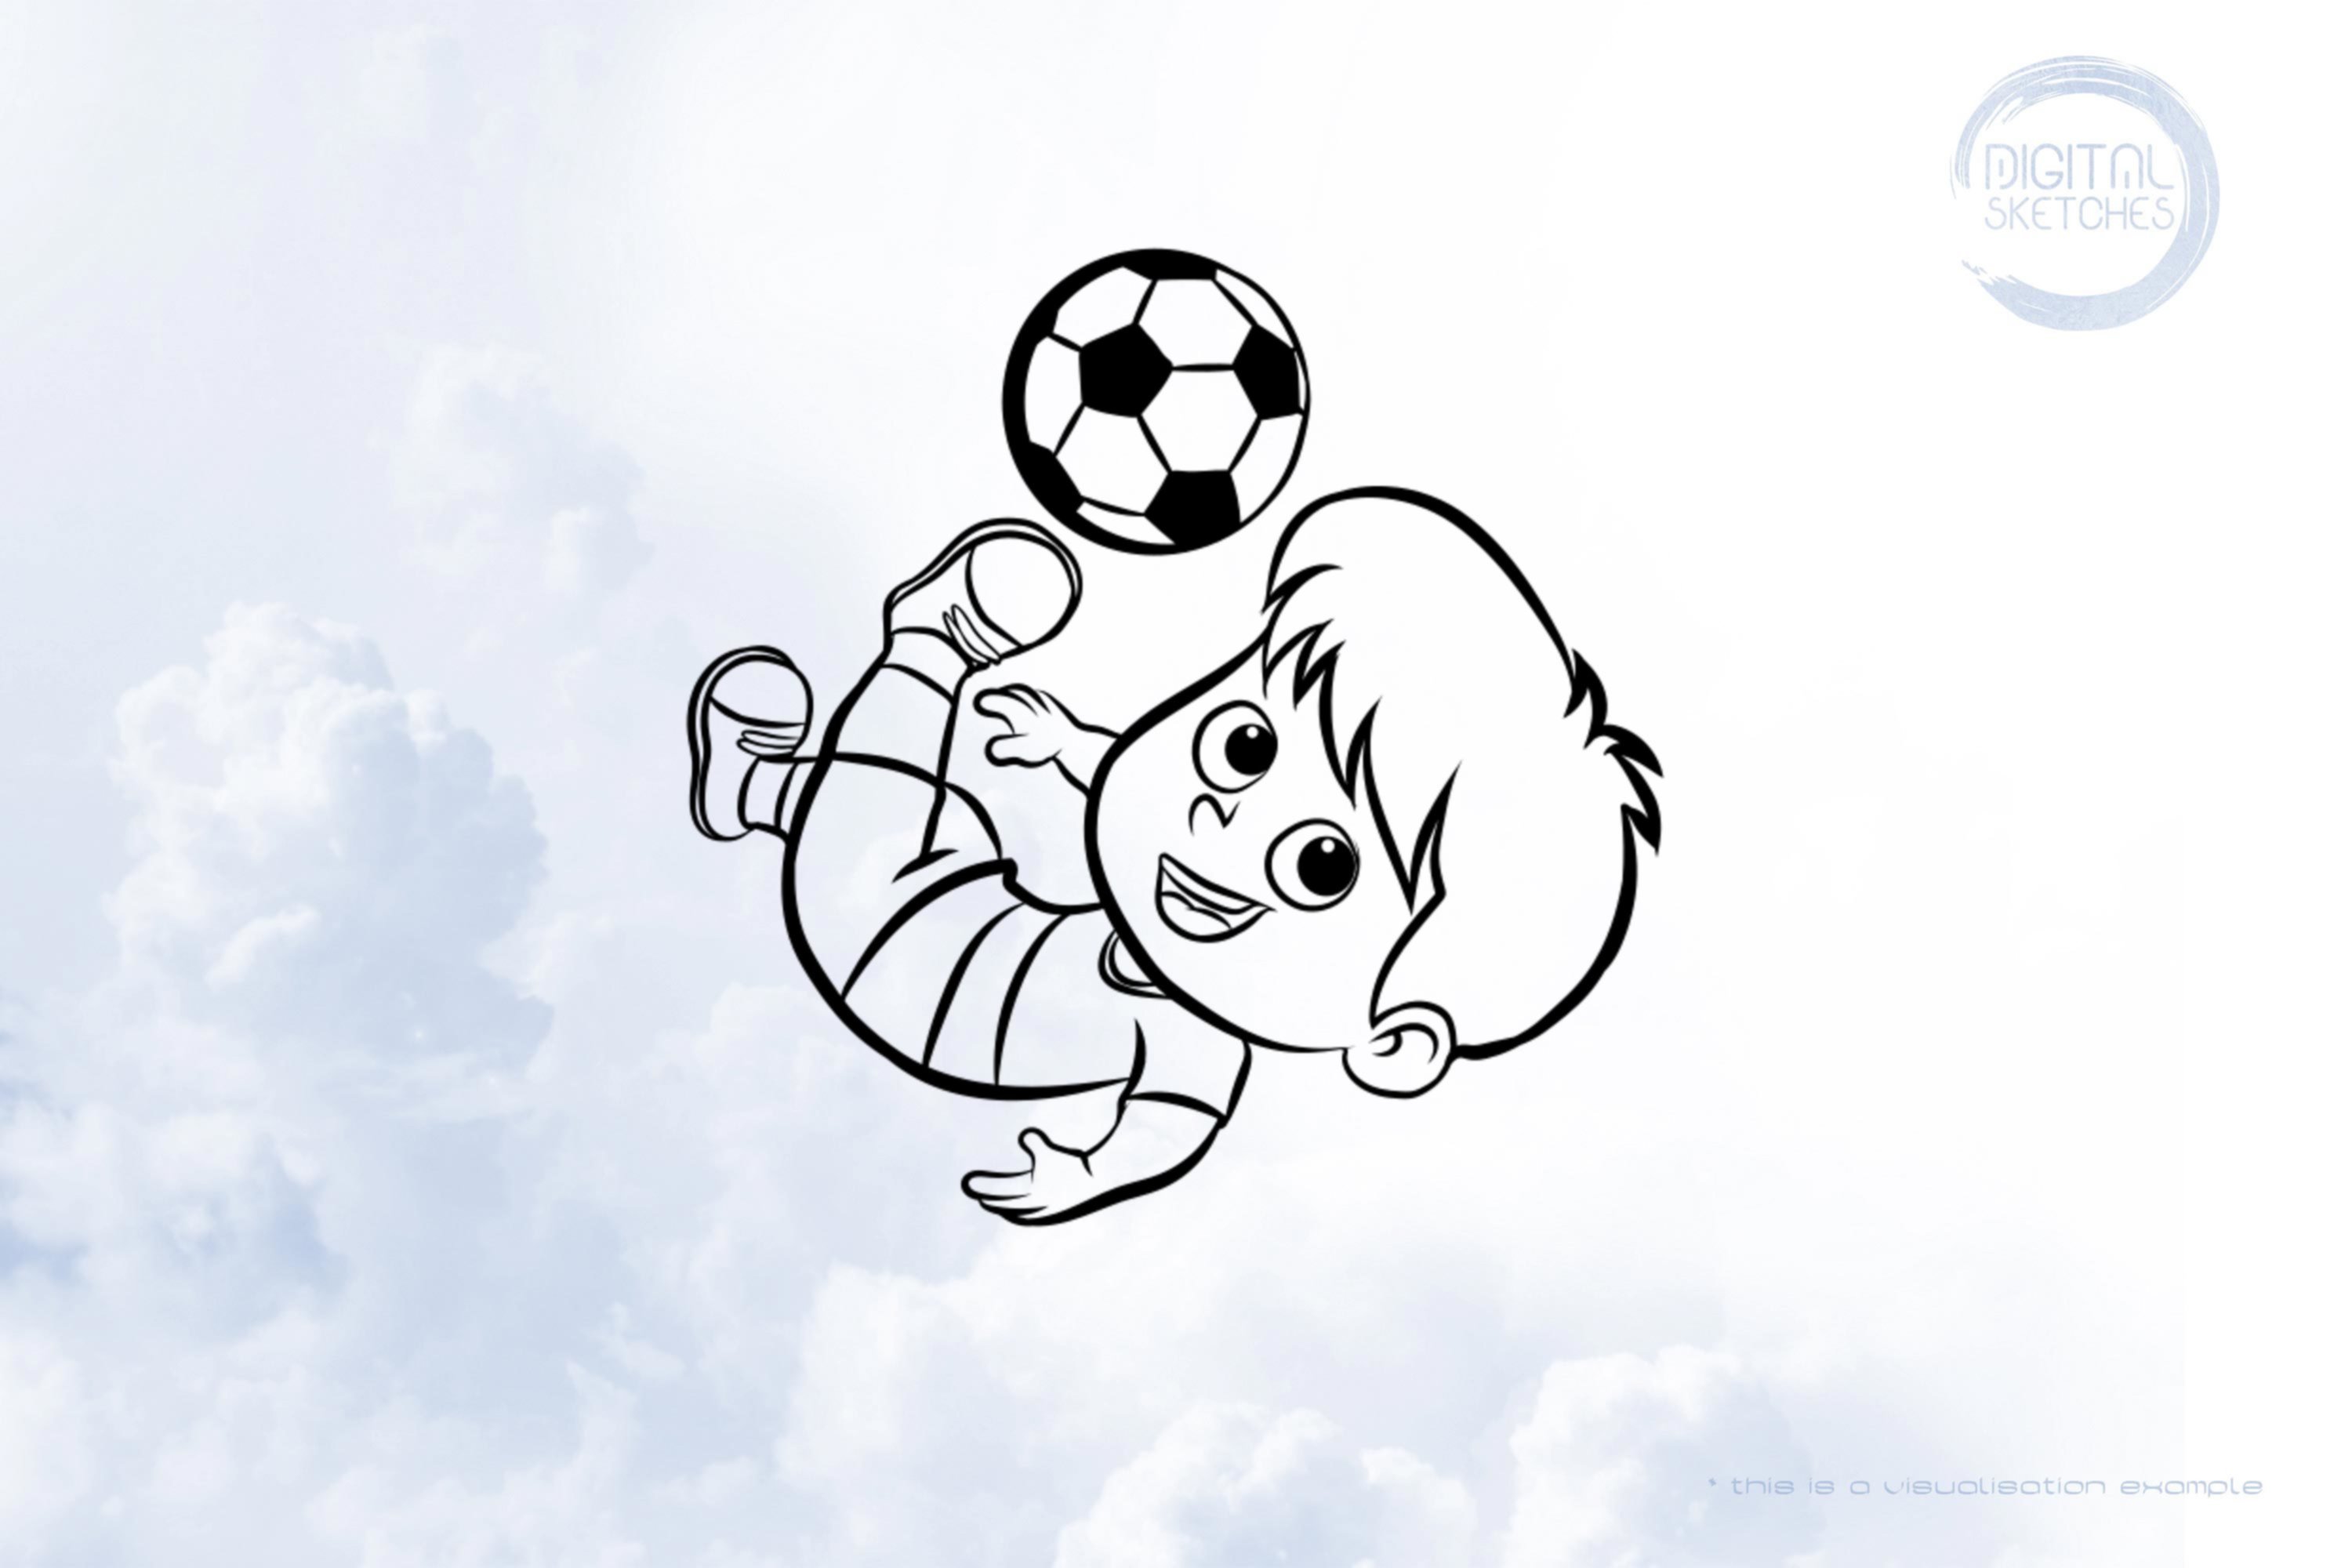 Soccer Boy Sketch IV